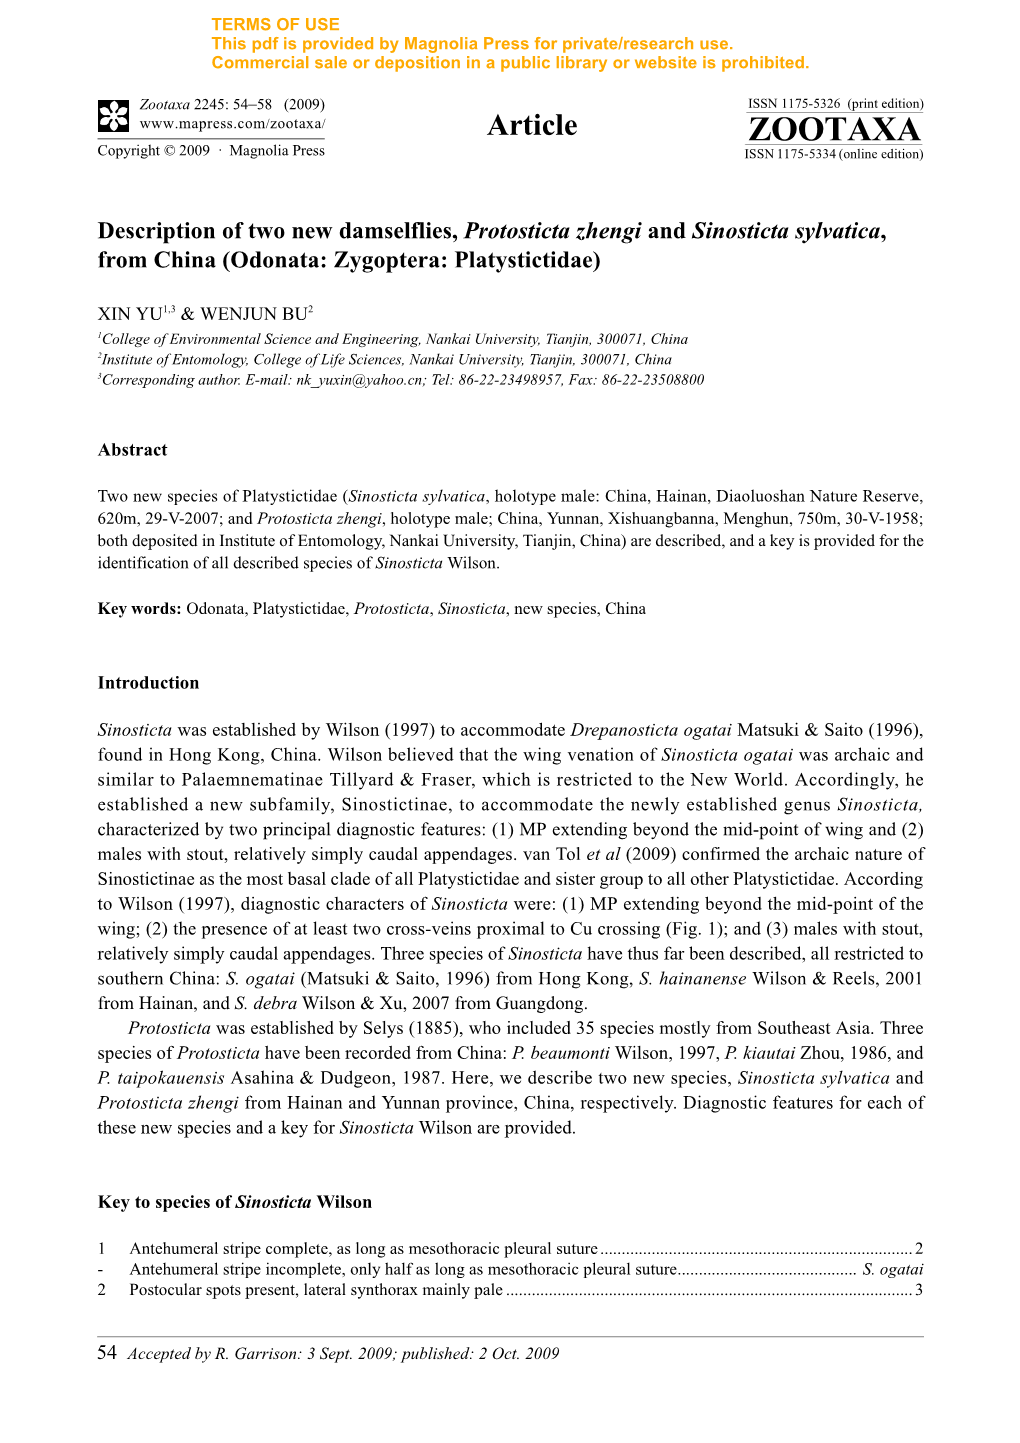 Zootaxa, Description of Two New Damselflies, Protosticta Zhengi And